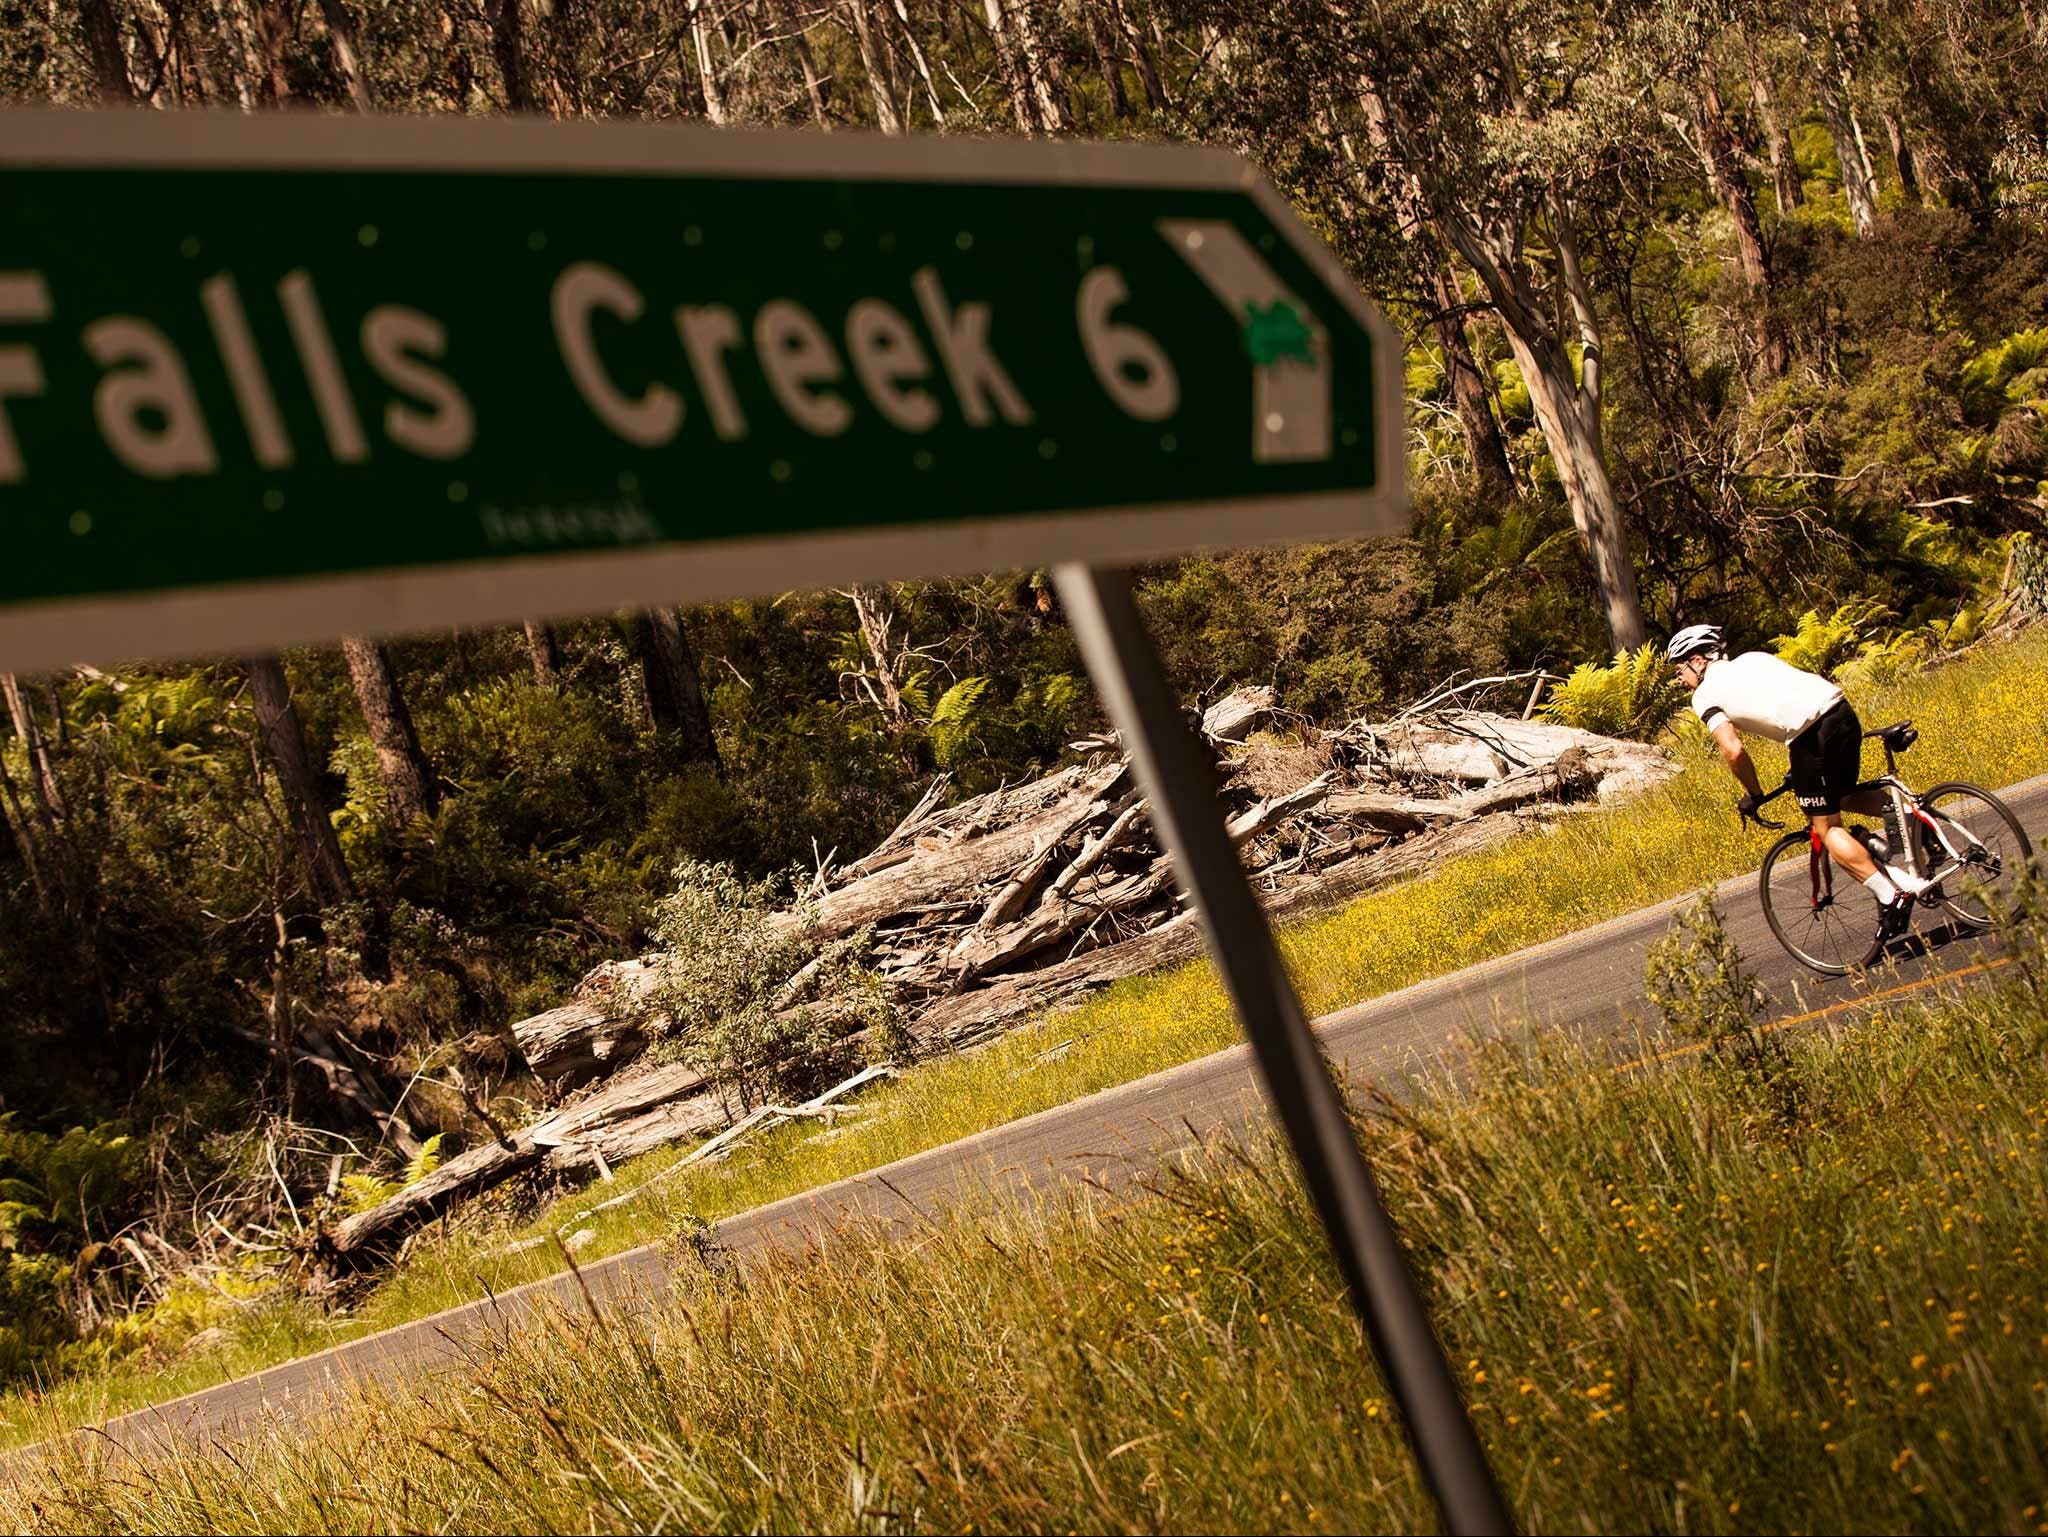 7 Peaks Ride - Falls Creek - Attractions